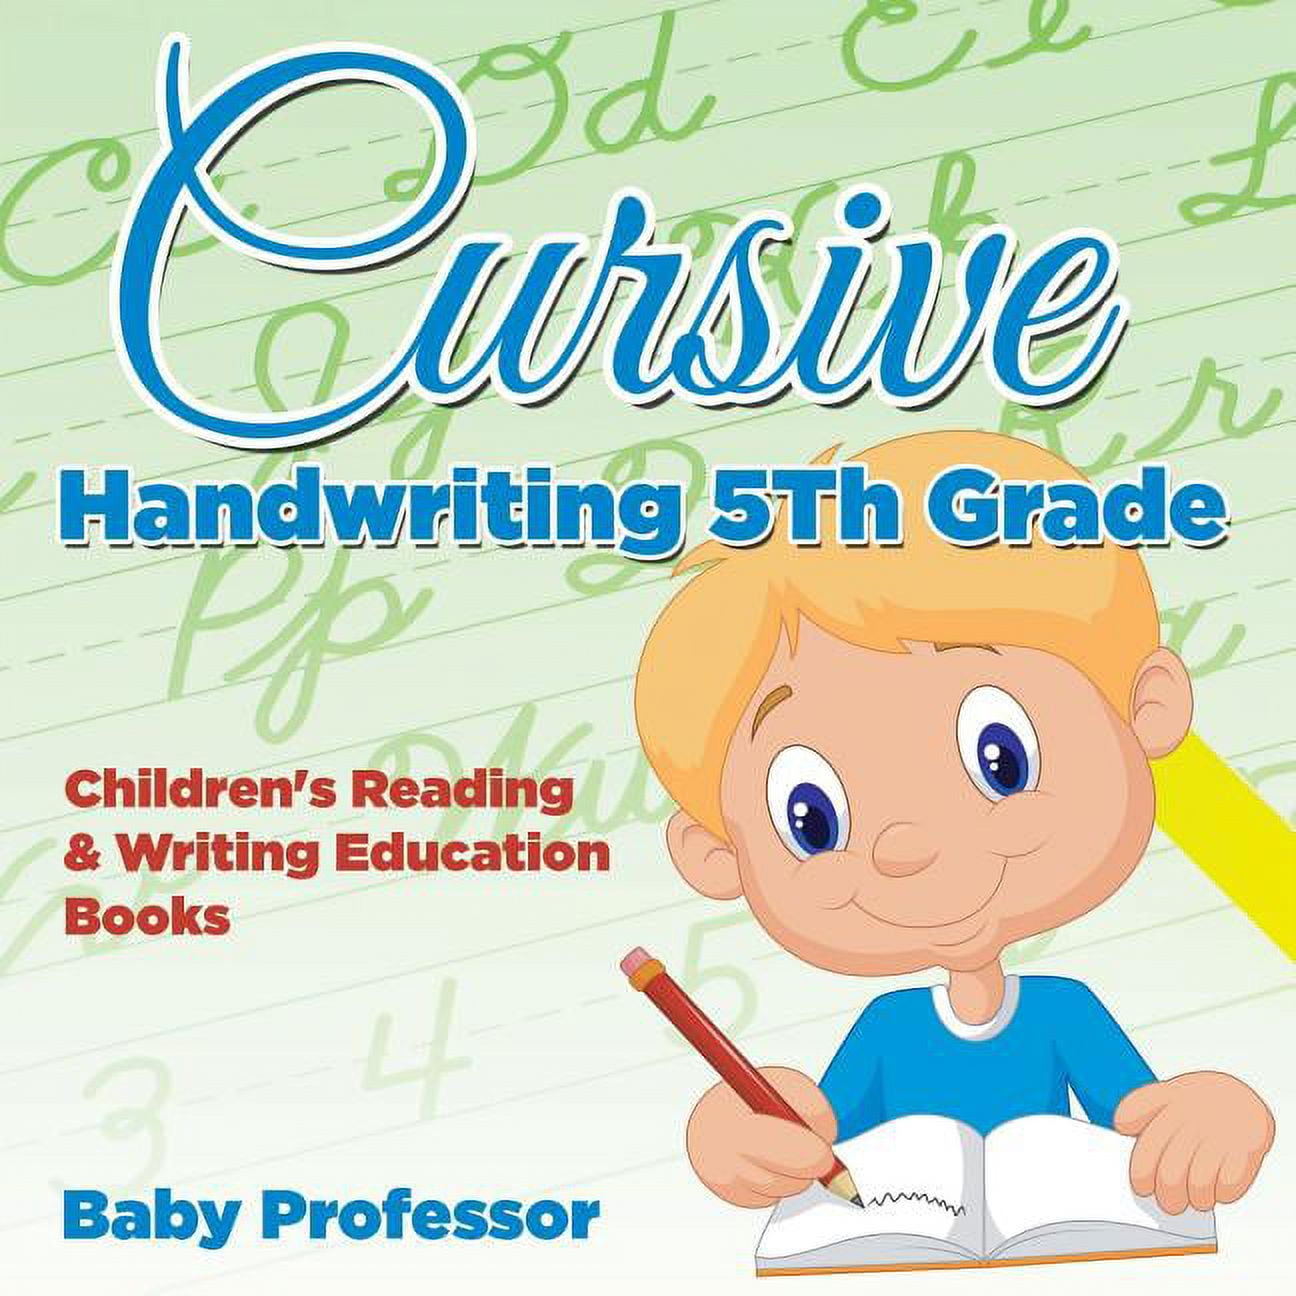 Writing Books for Kids: Buy Kids Cursive Writing Book & Hand